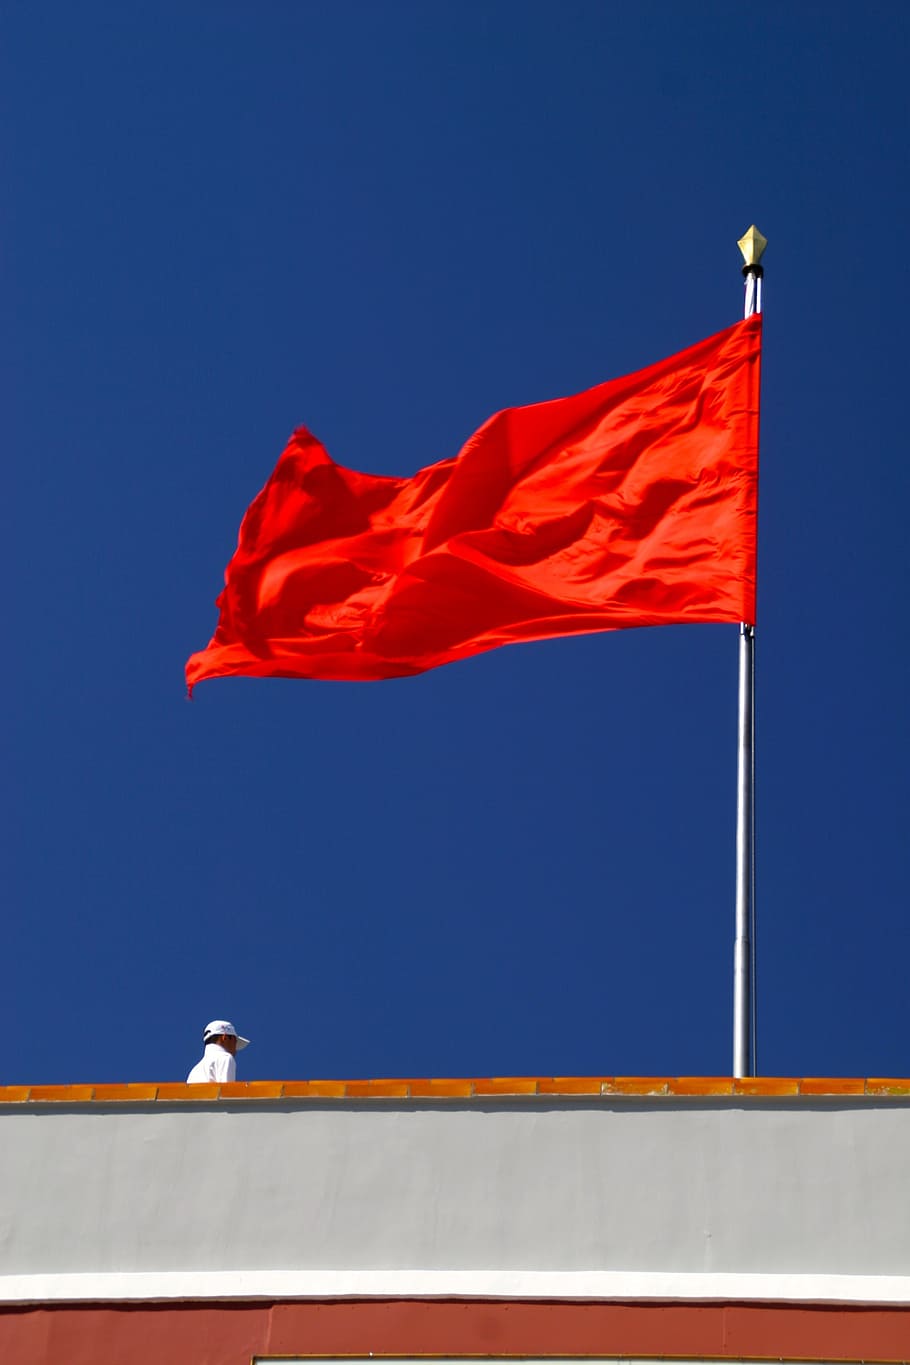 merah, bendera, melambai, tiang, biru, langit, sosialisme, tiang bendera, mengepak, pukulan